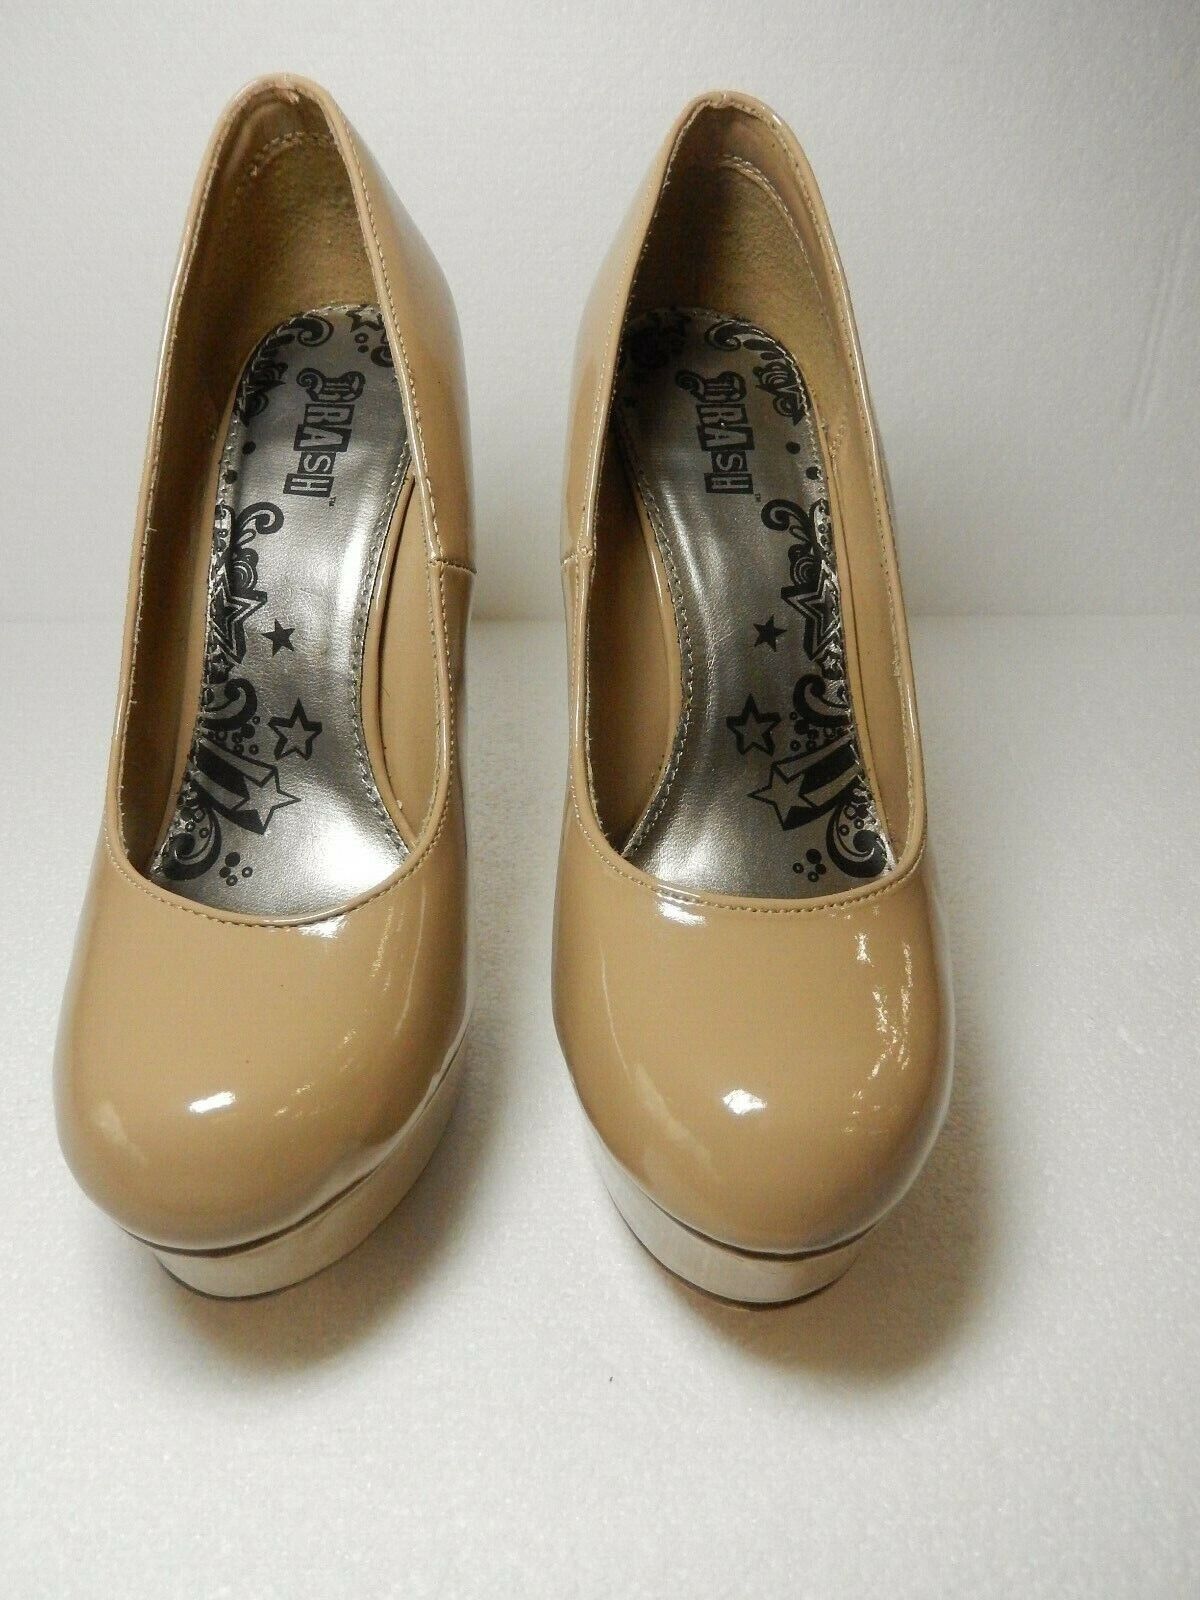 *NEW* Brash Heels Patent Leather Platform  Size 7 with 5-1/4" Stiletto Heels